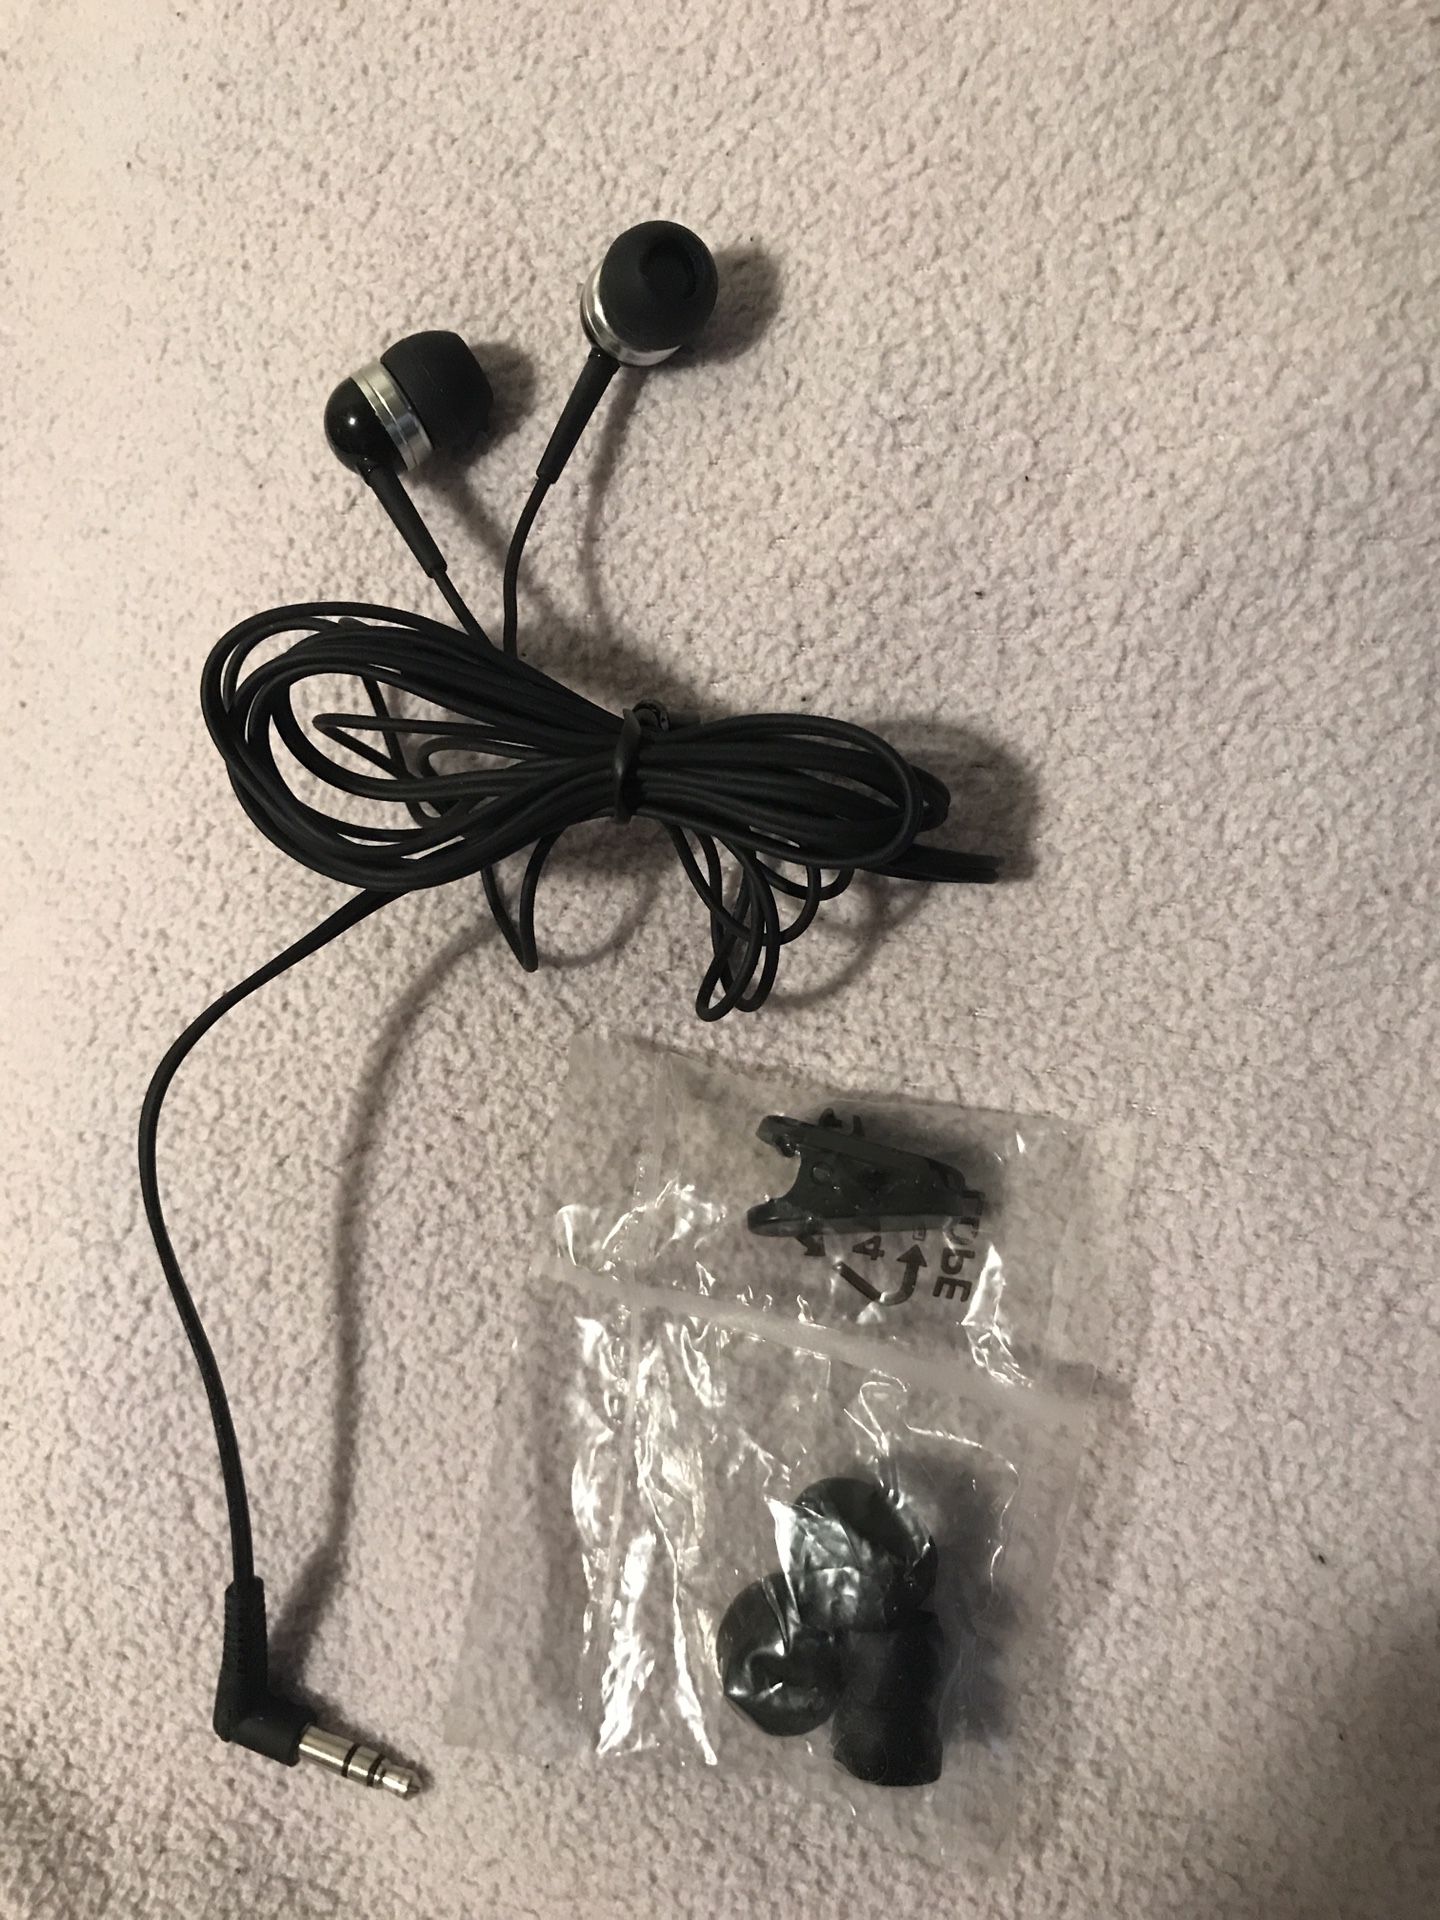 Sennheiser CX300 earbuds